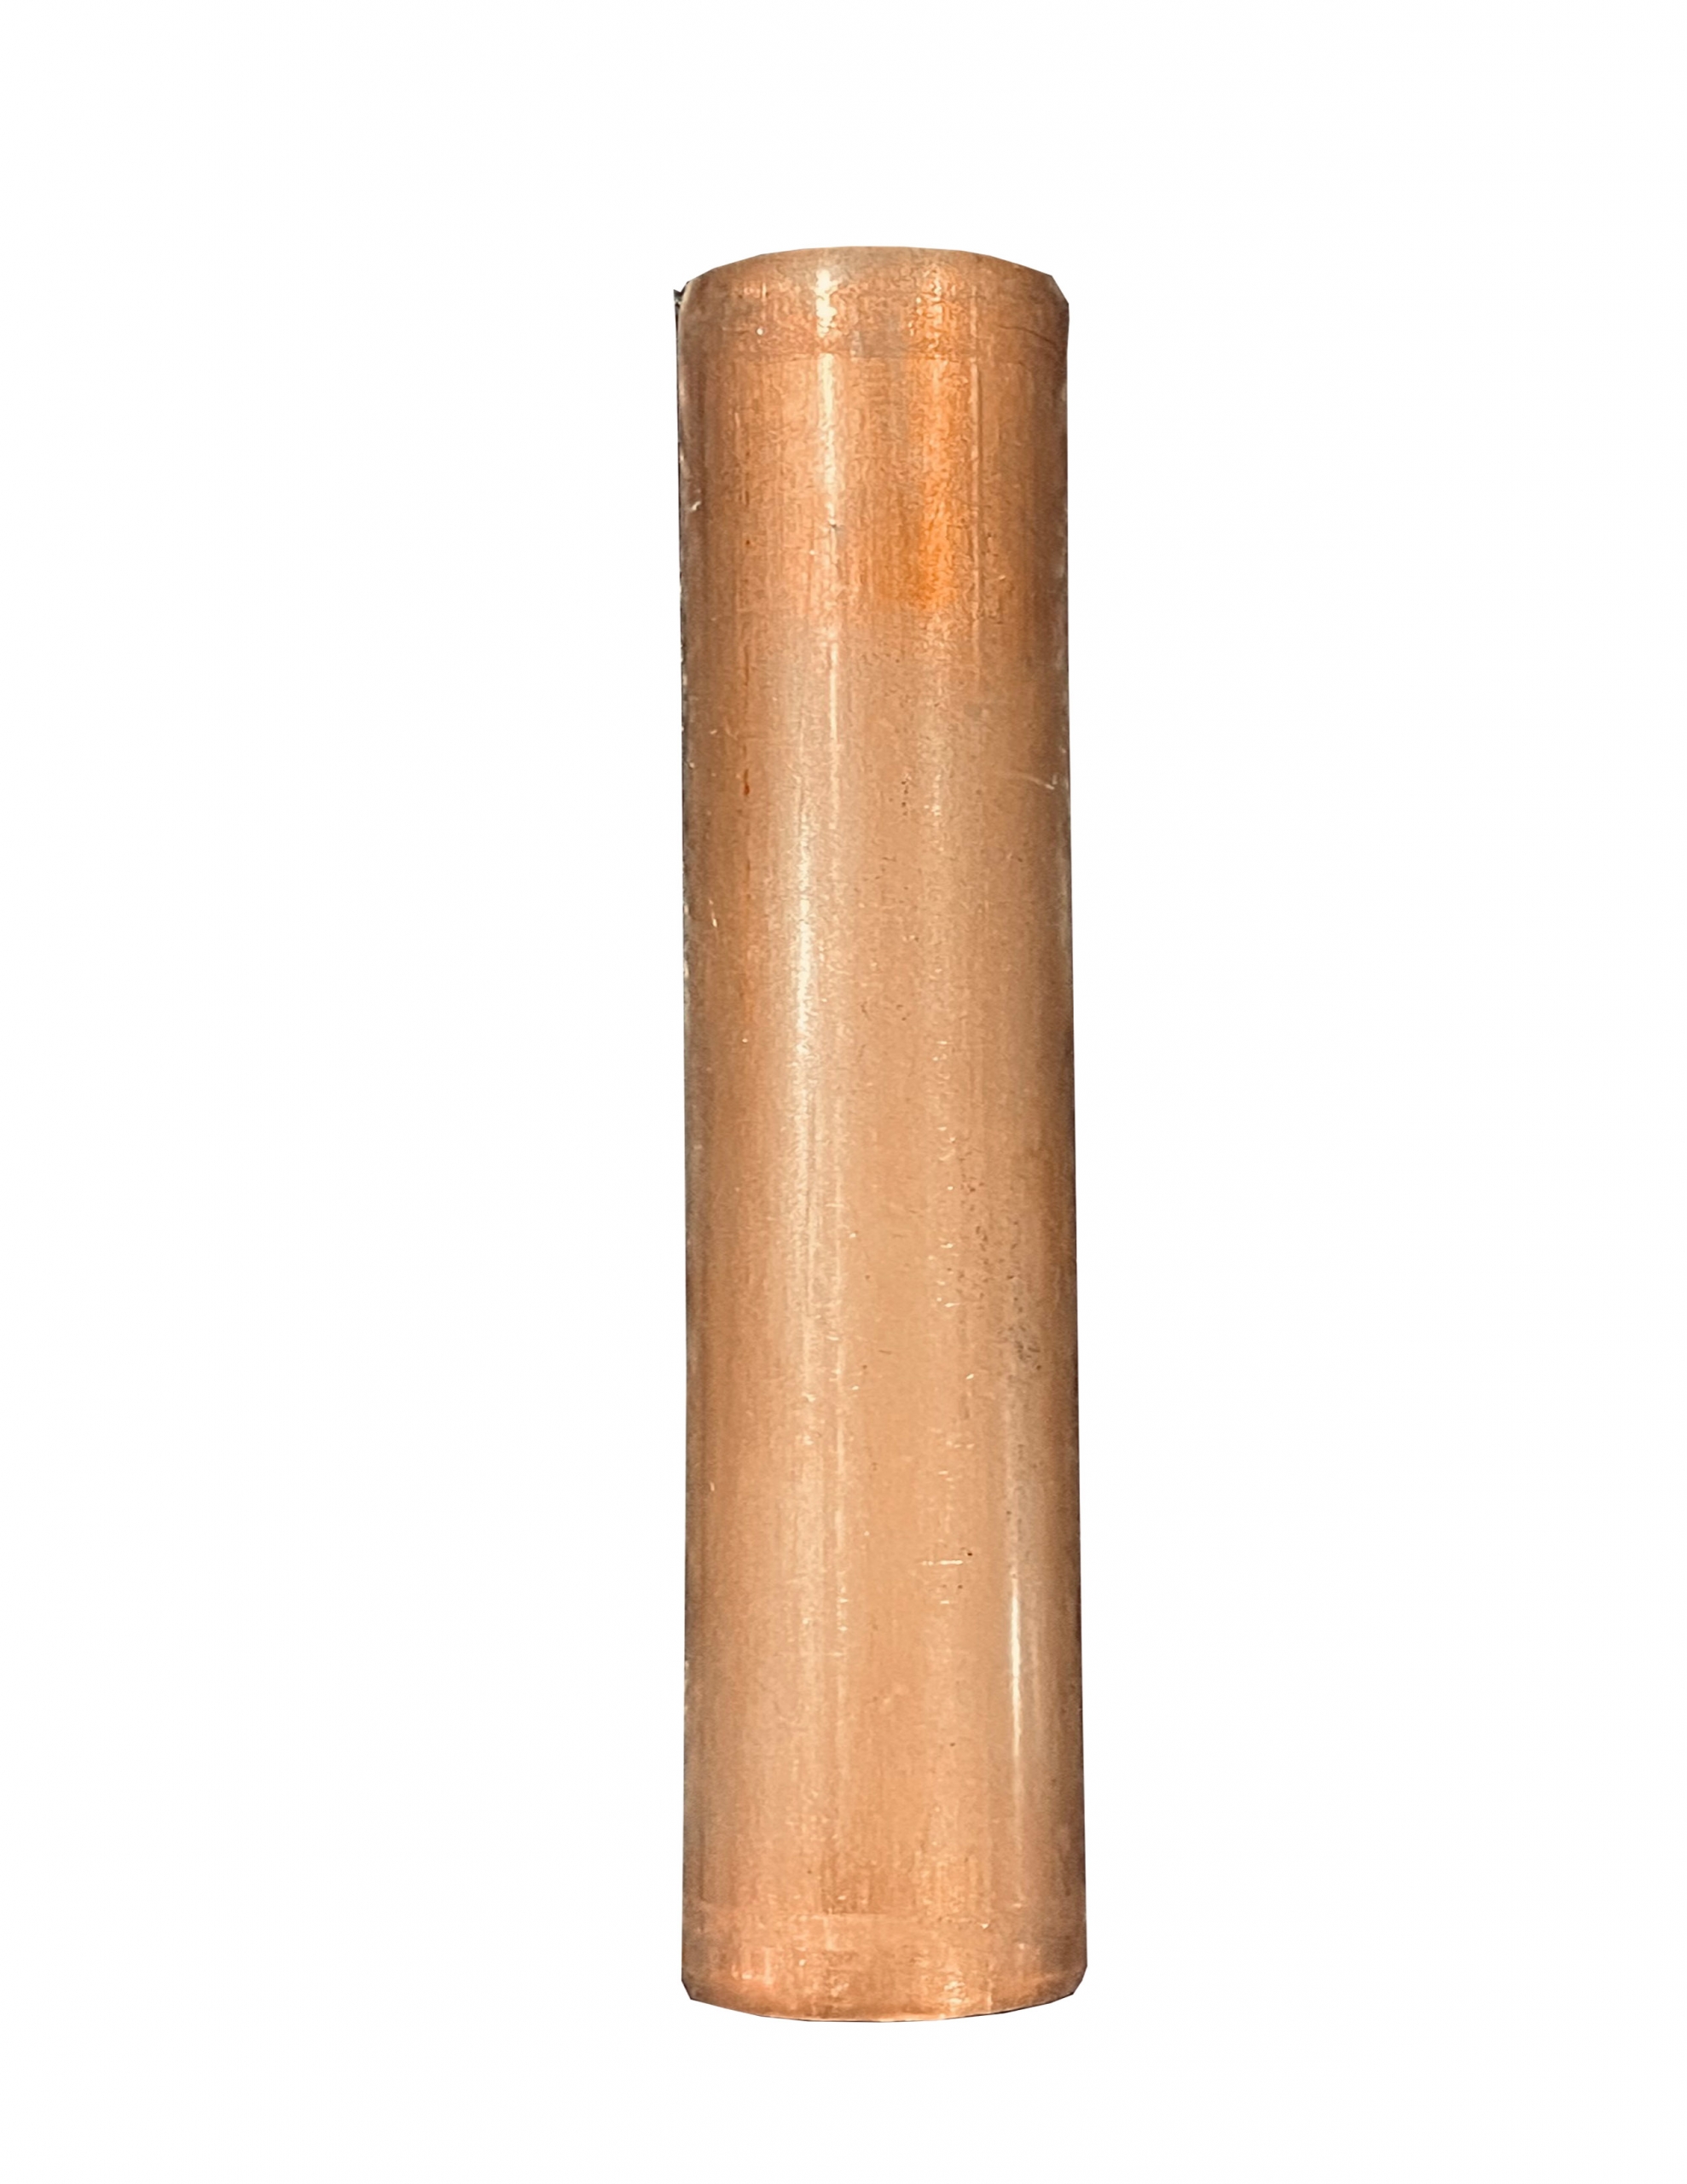 4-6" Solid Copper Medium Base Sleeve (Raw or Aged Copper)